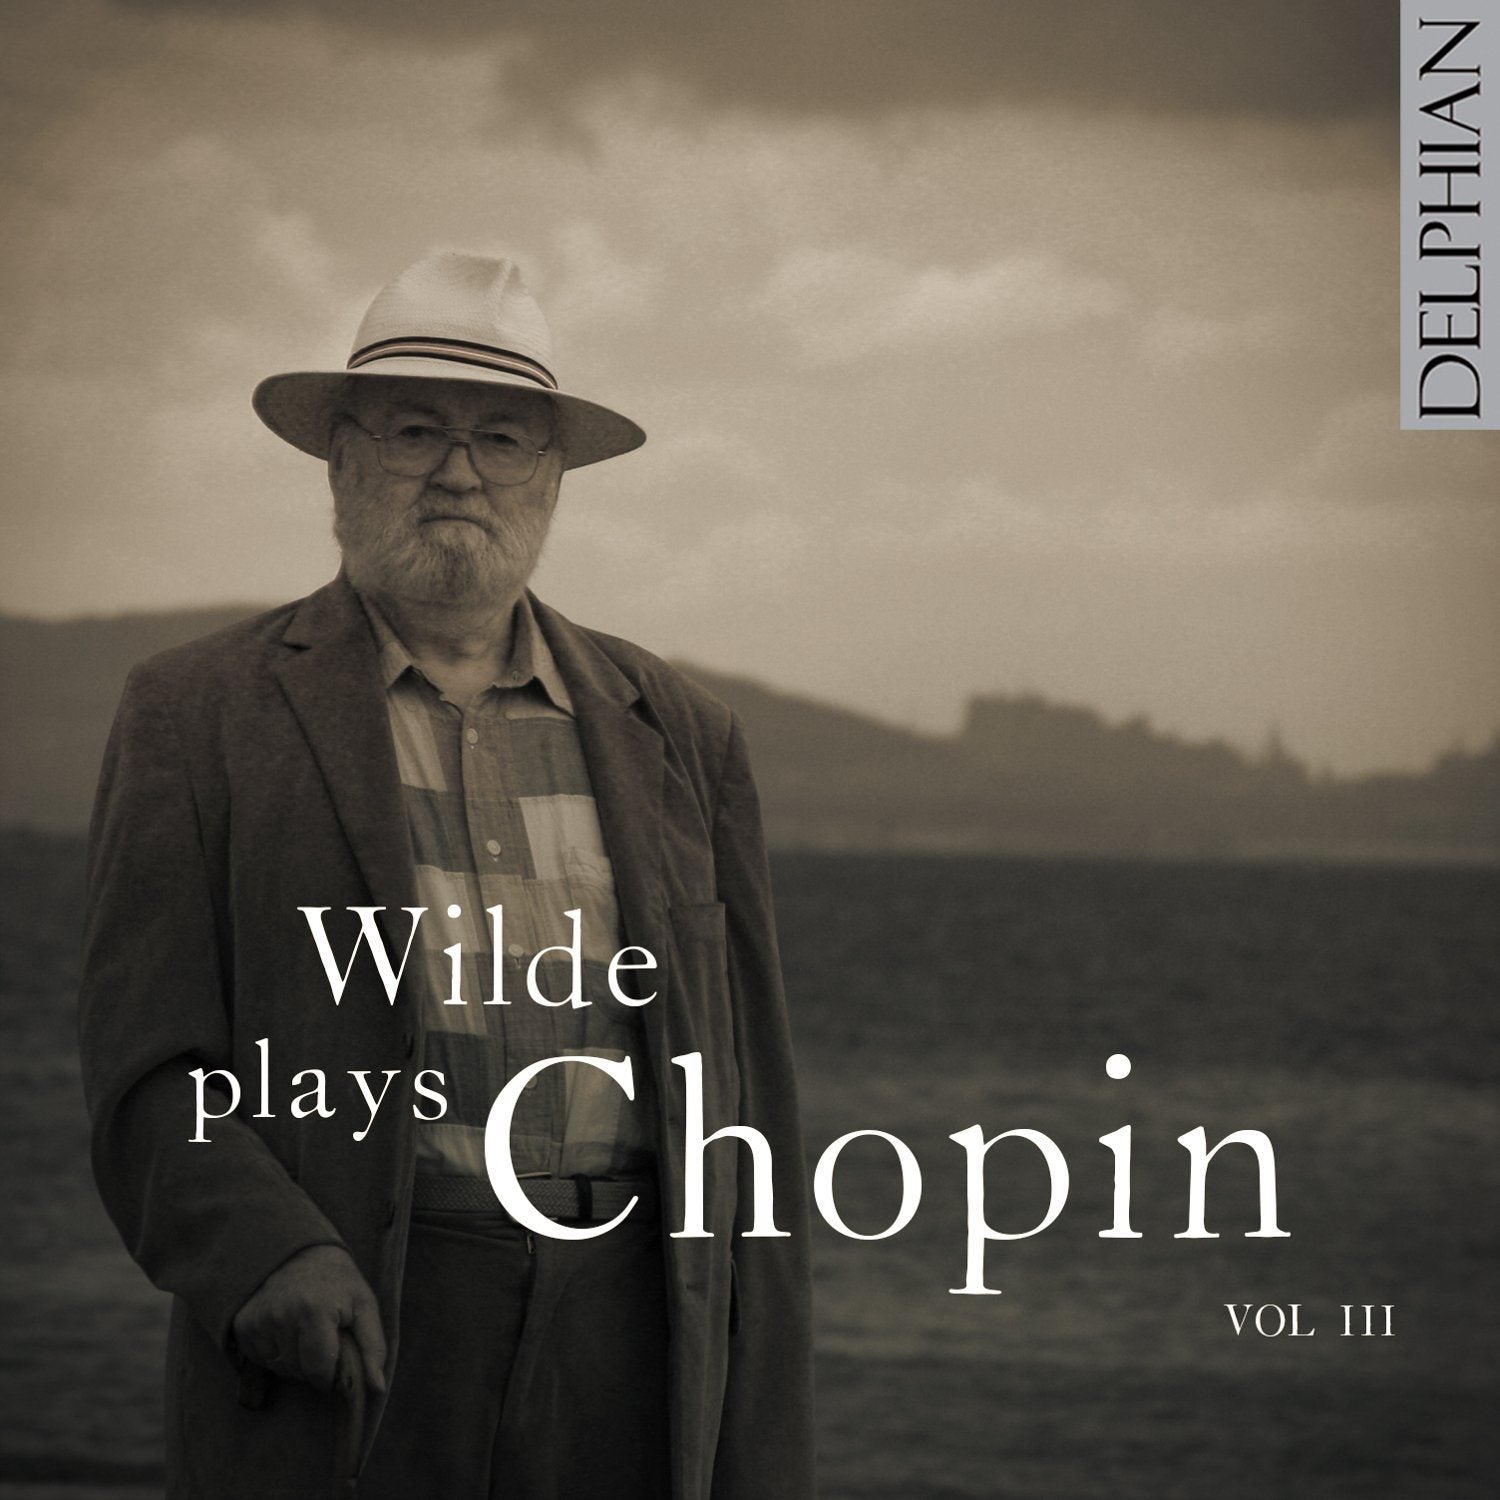 Wilde plays Chopin Vol III CD Delphian Records